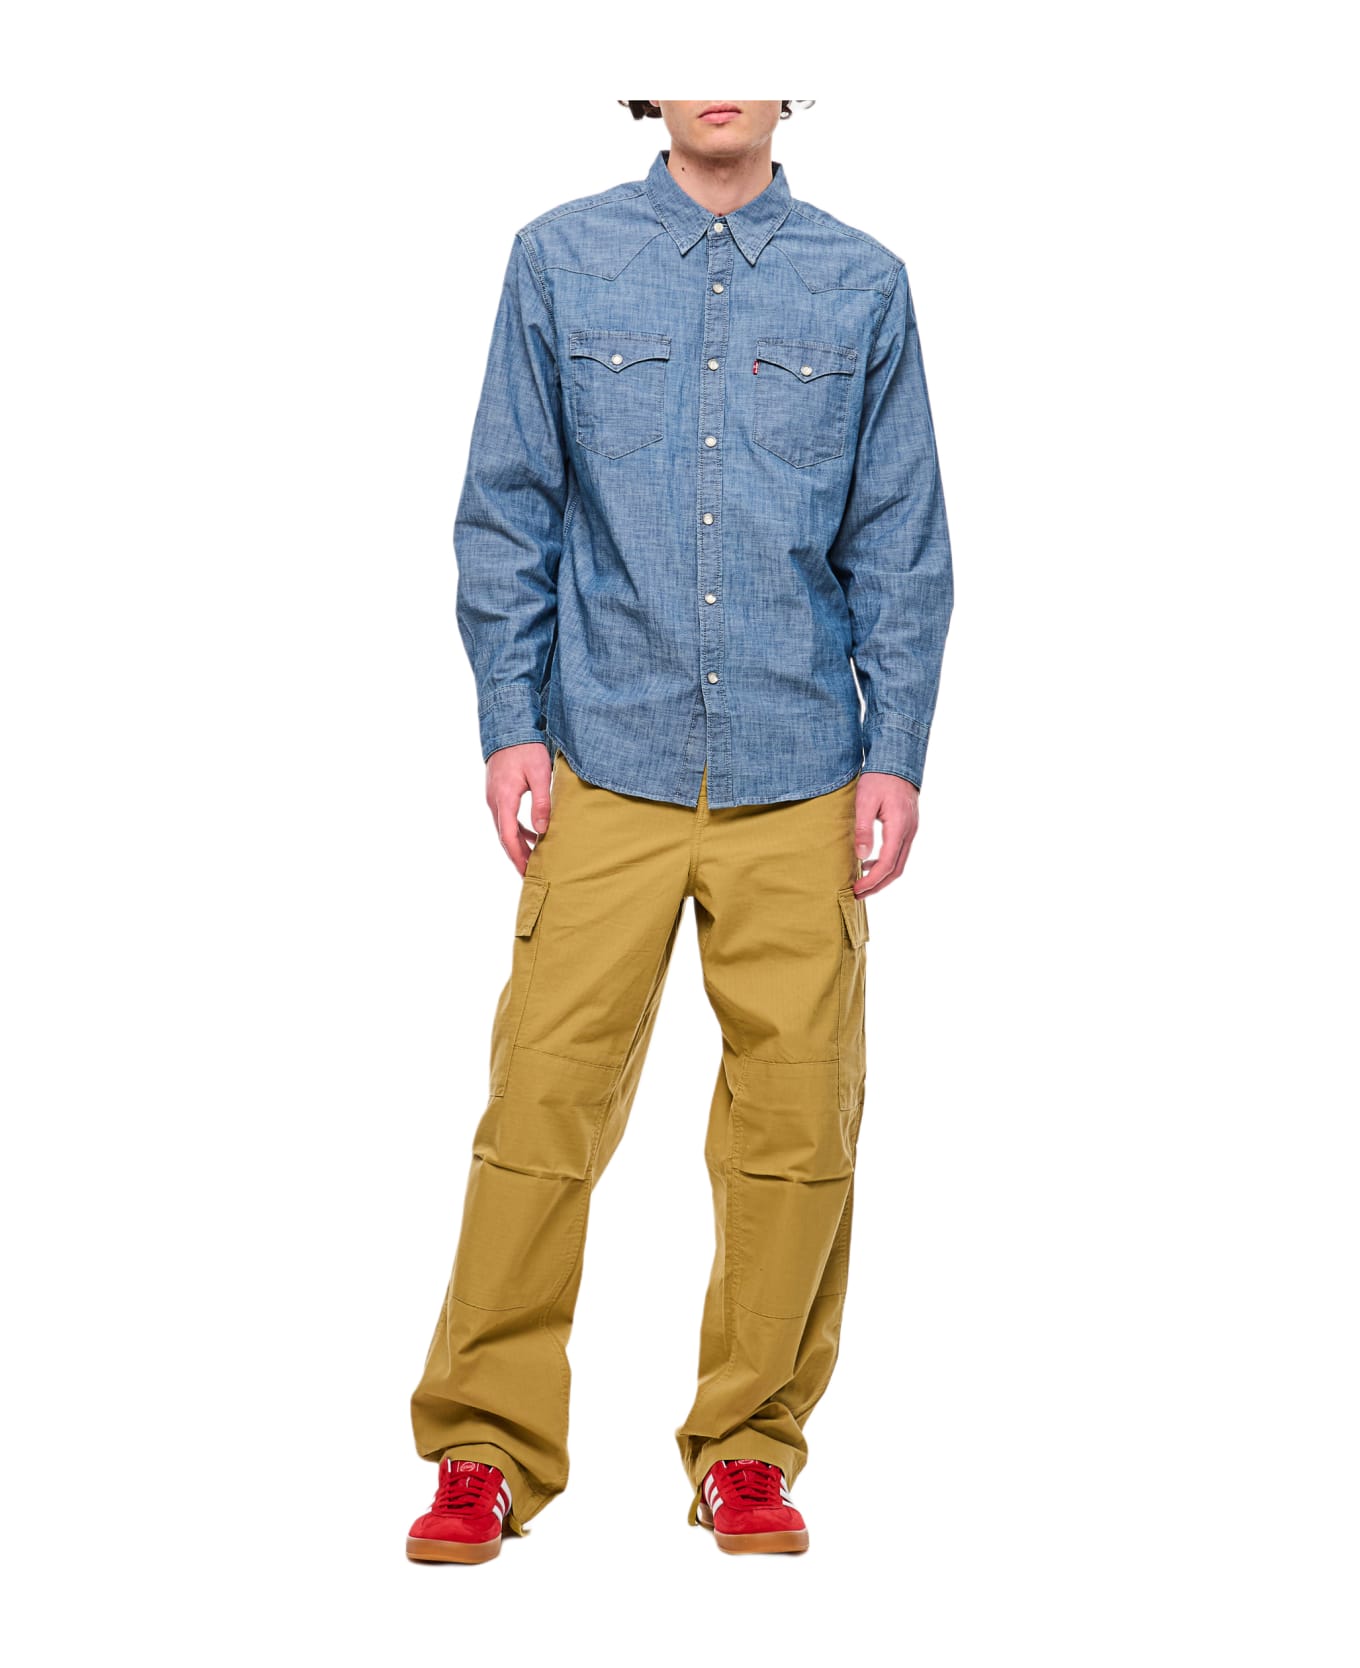 Levi's Bartsow Standard Shirt - Blue